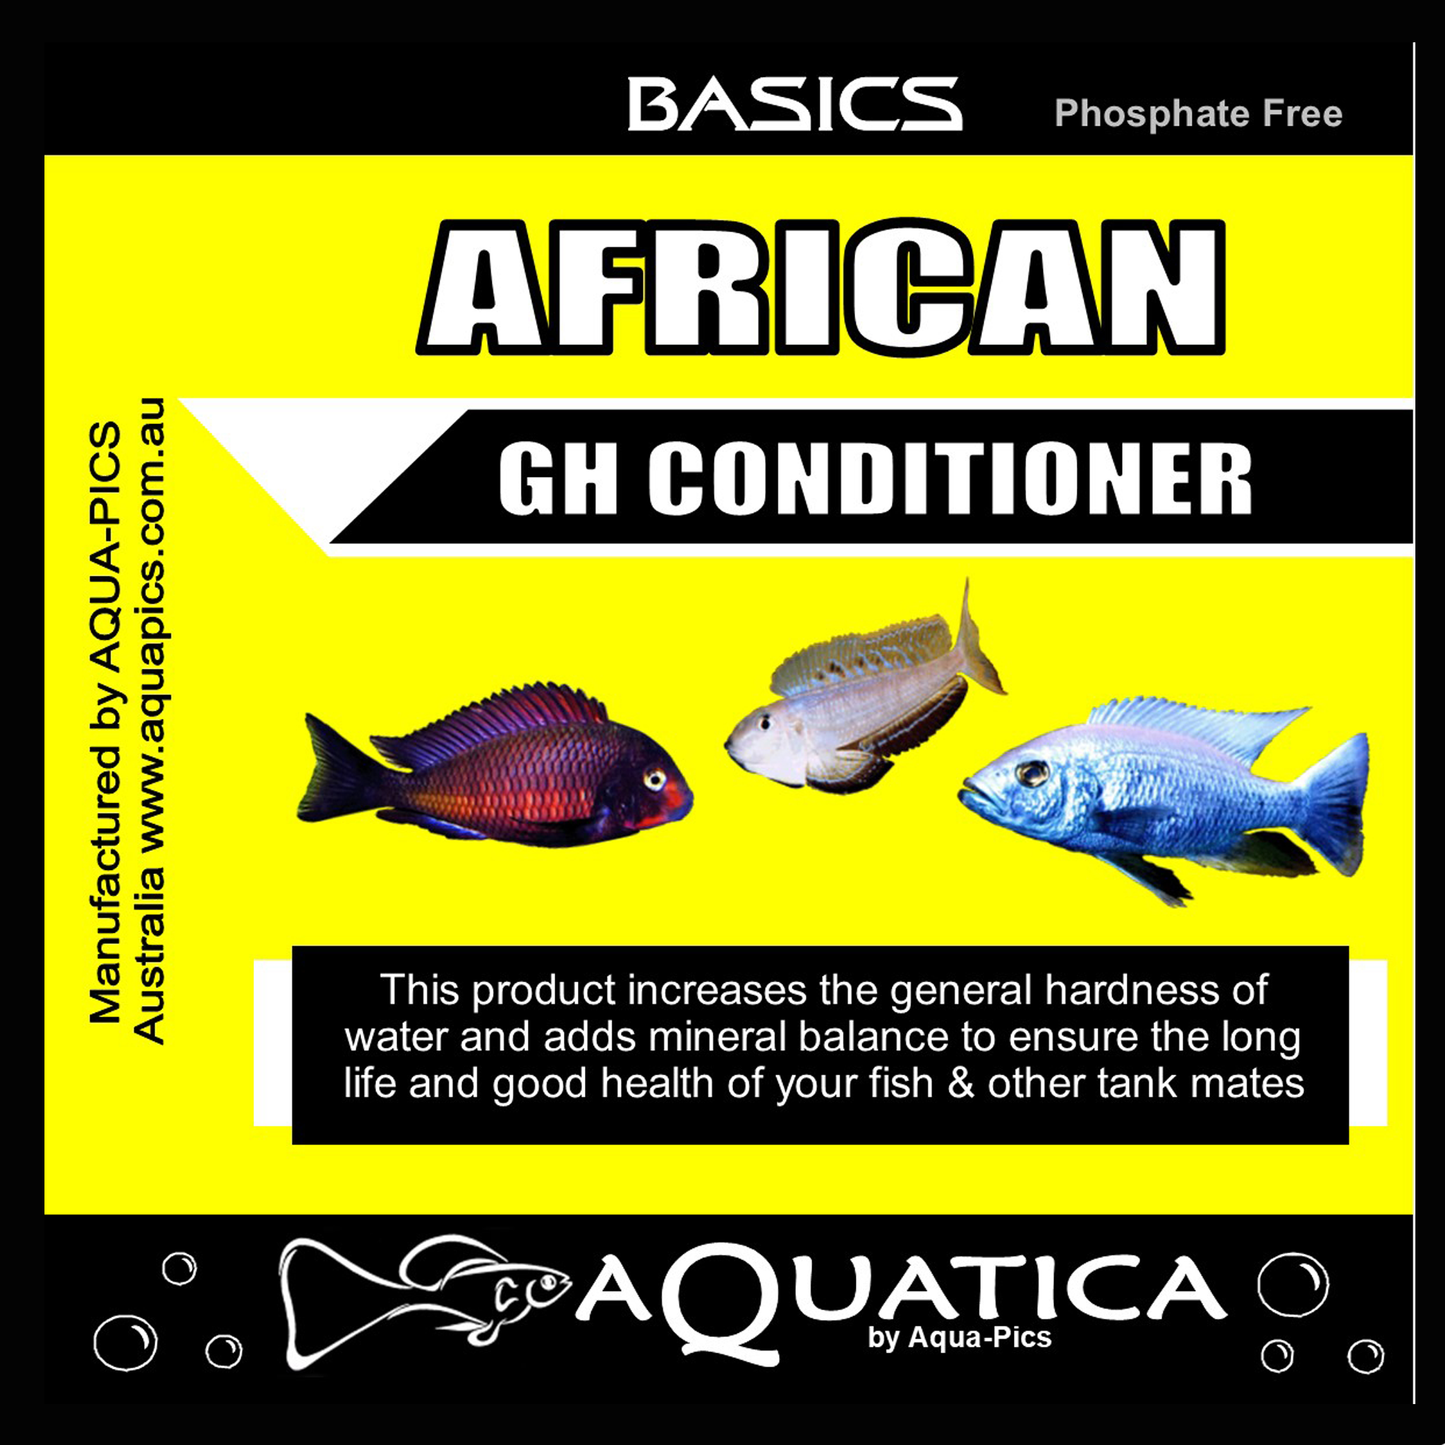 Aquatica Basics African GH Conditioner 250g bag